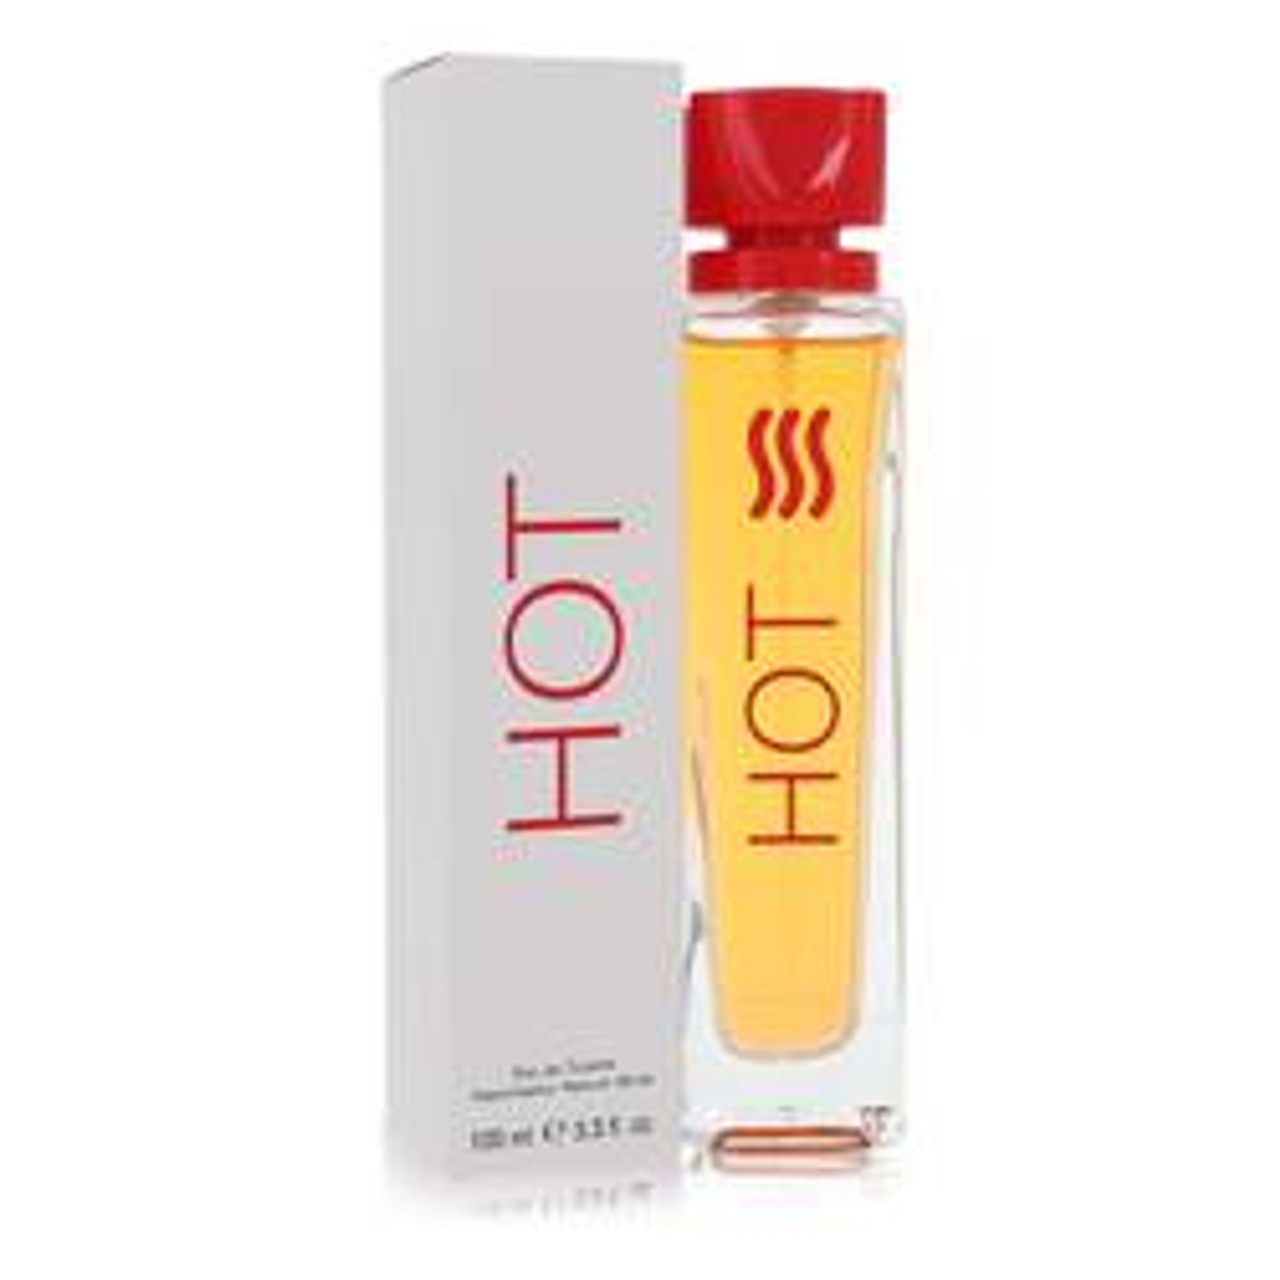 Hot Perfume By Benetton Eau De Toilette Spray (Unisex) 3.4 oz for Women - [From 27.00 - Choose pk Qty ] - *Ships from Miami